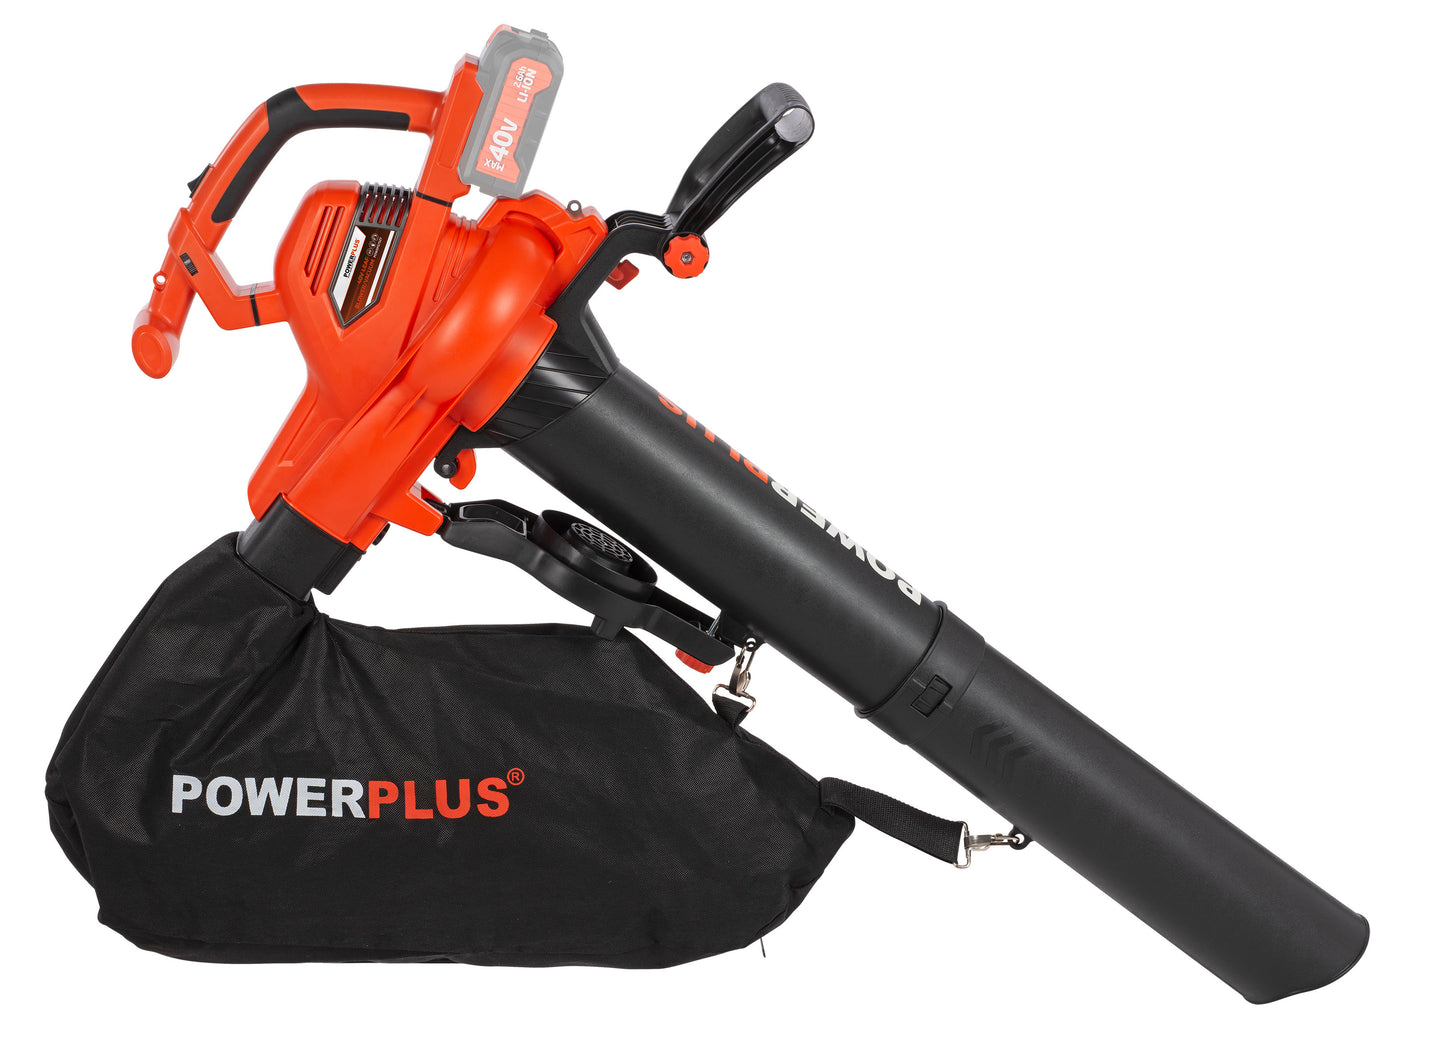 Dual Power - 40V Cordless Leaf Blower/ Vacuum Brushless - 280km/h (unit only)